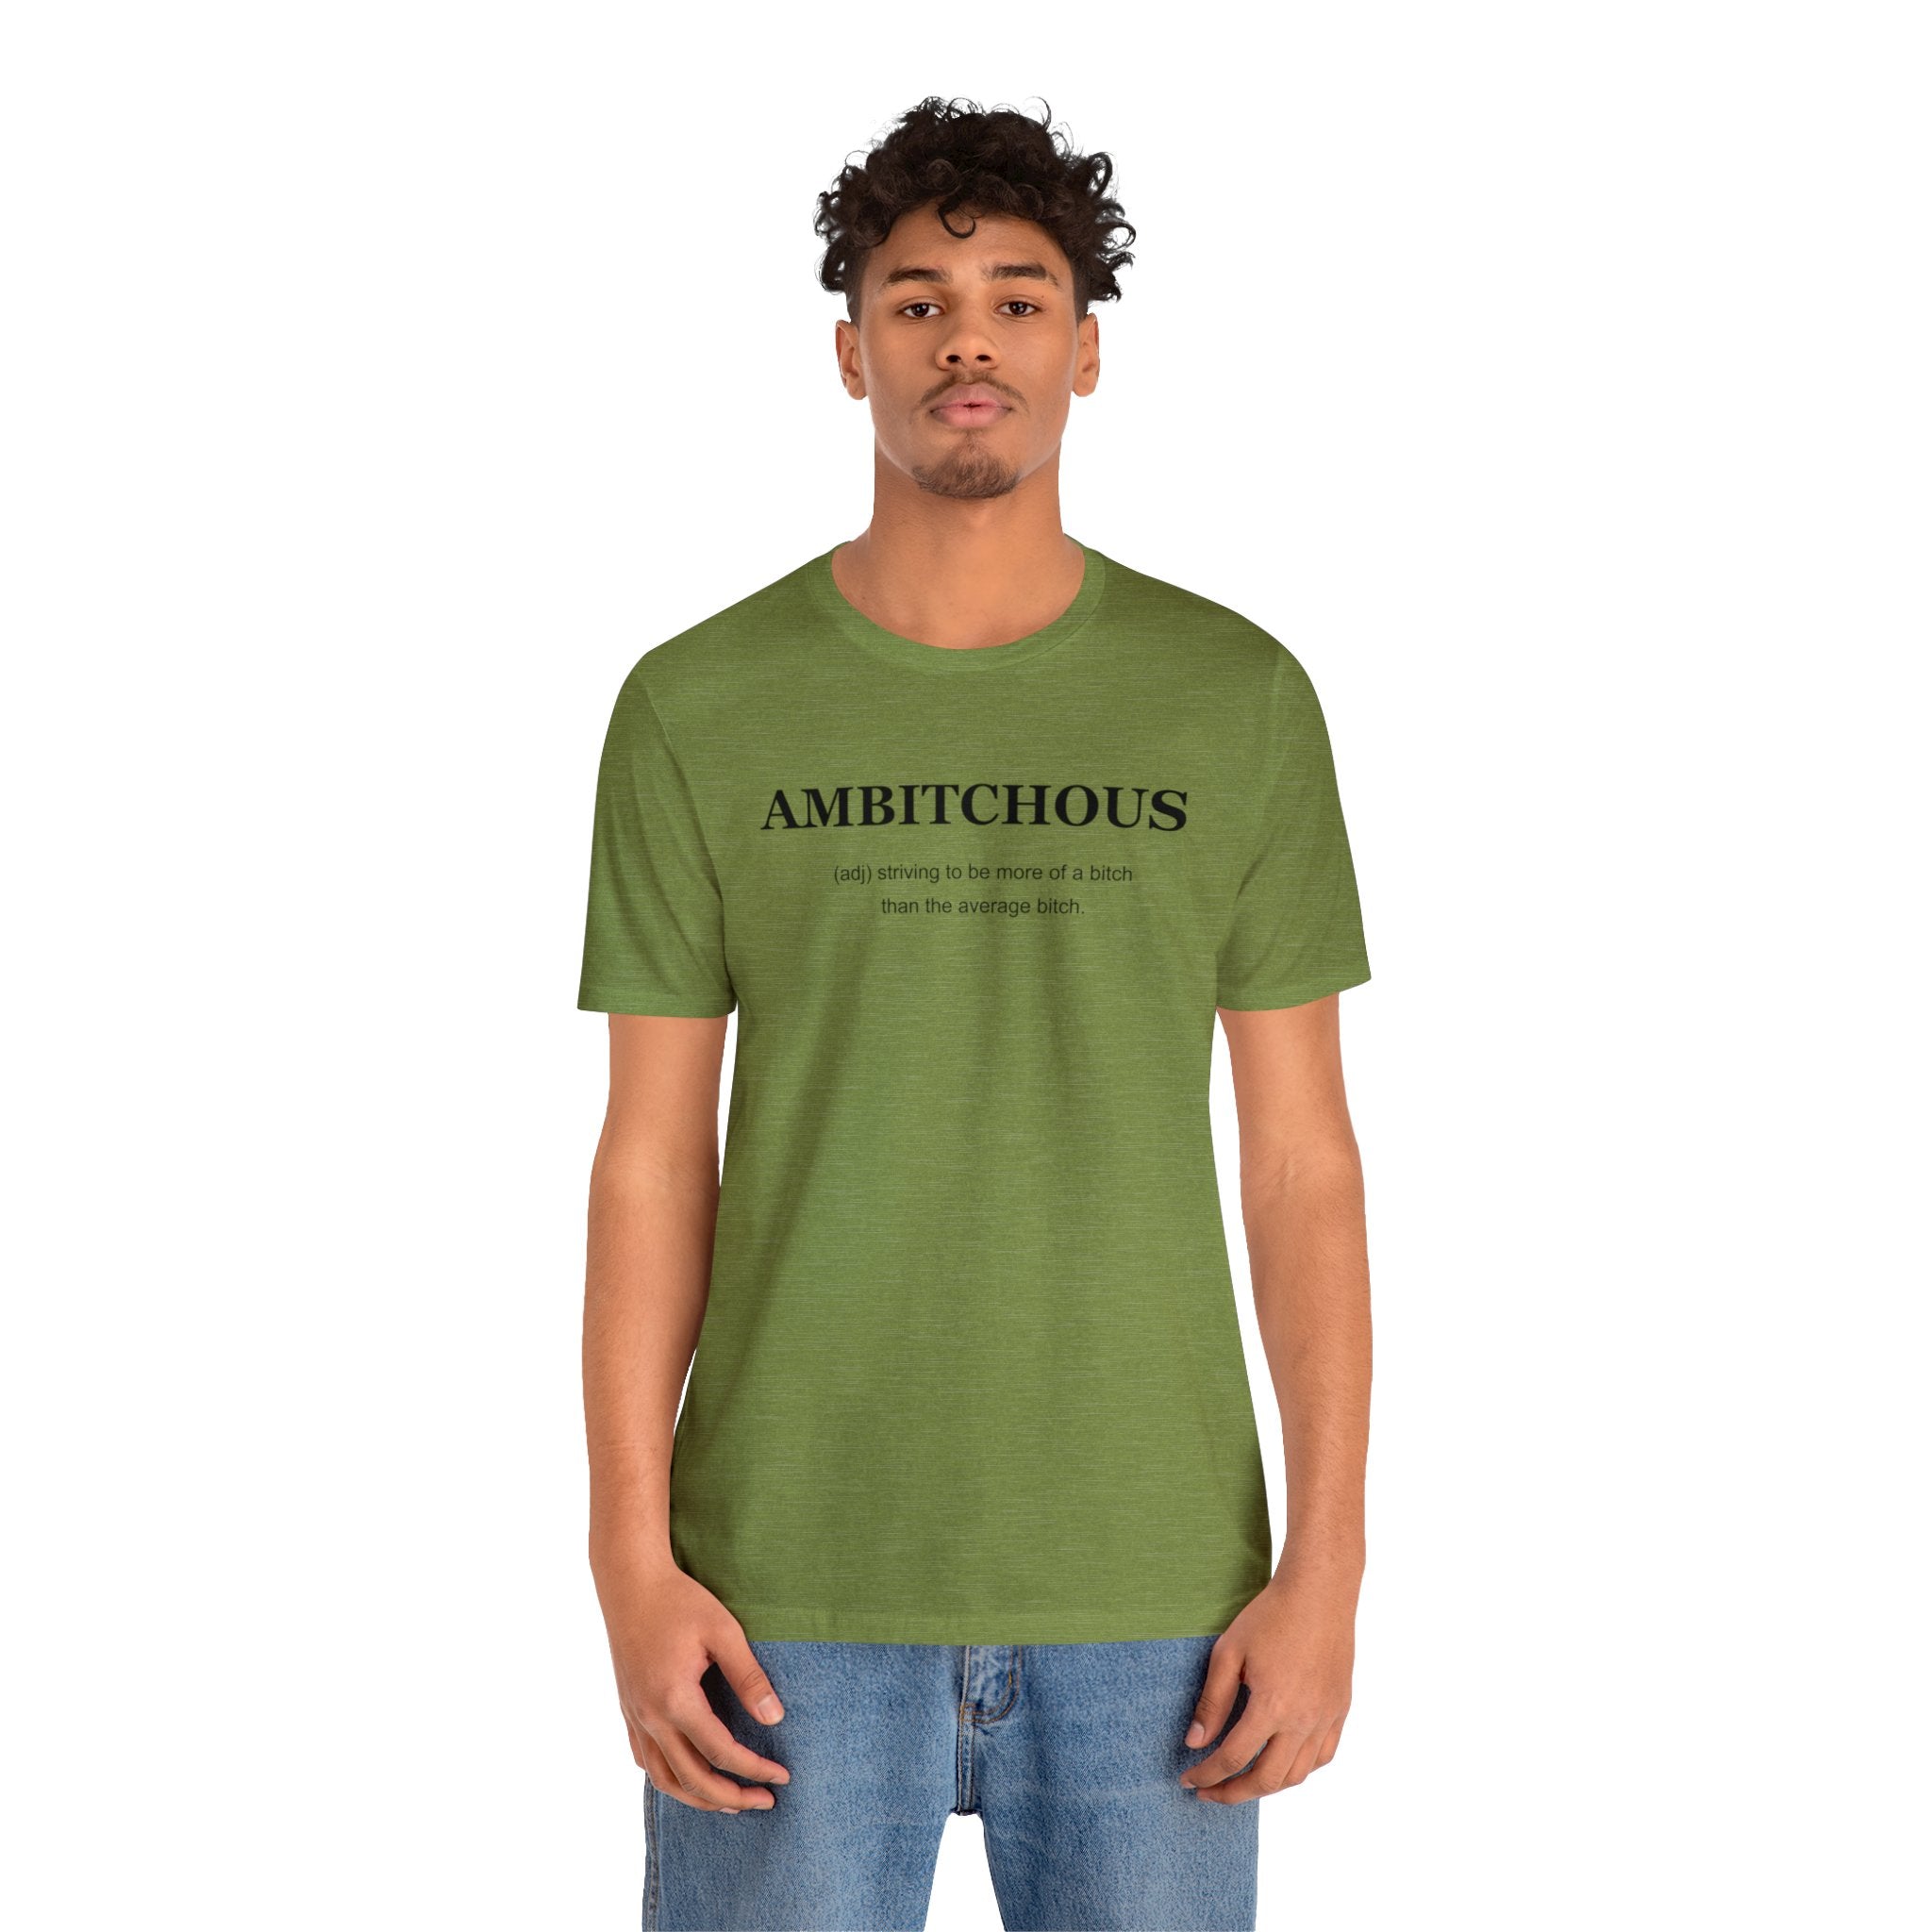 A man wearing a green Ambitchious T-Shirt.